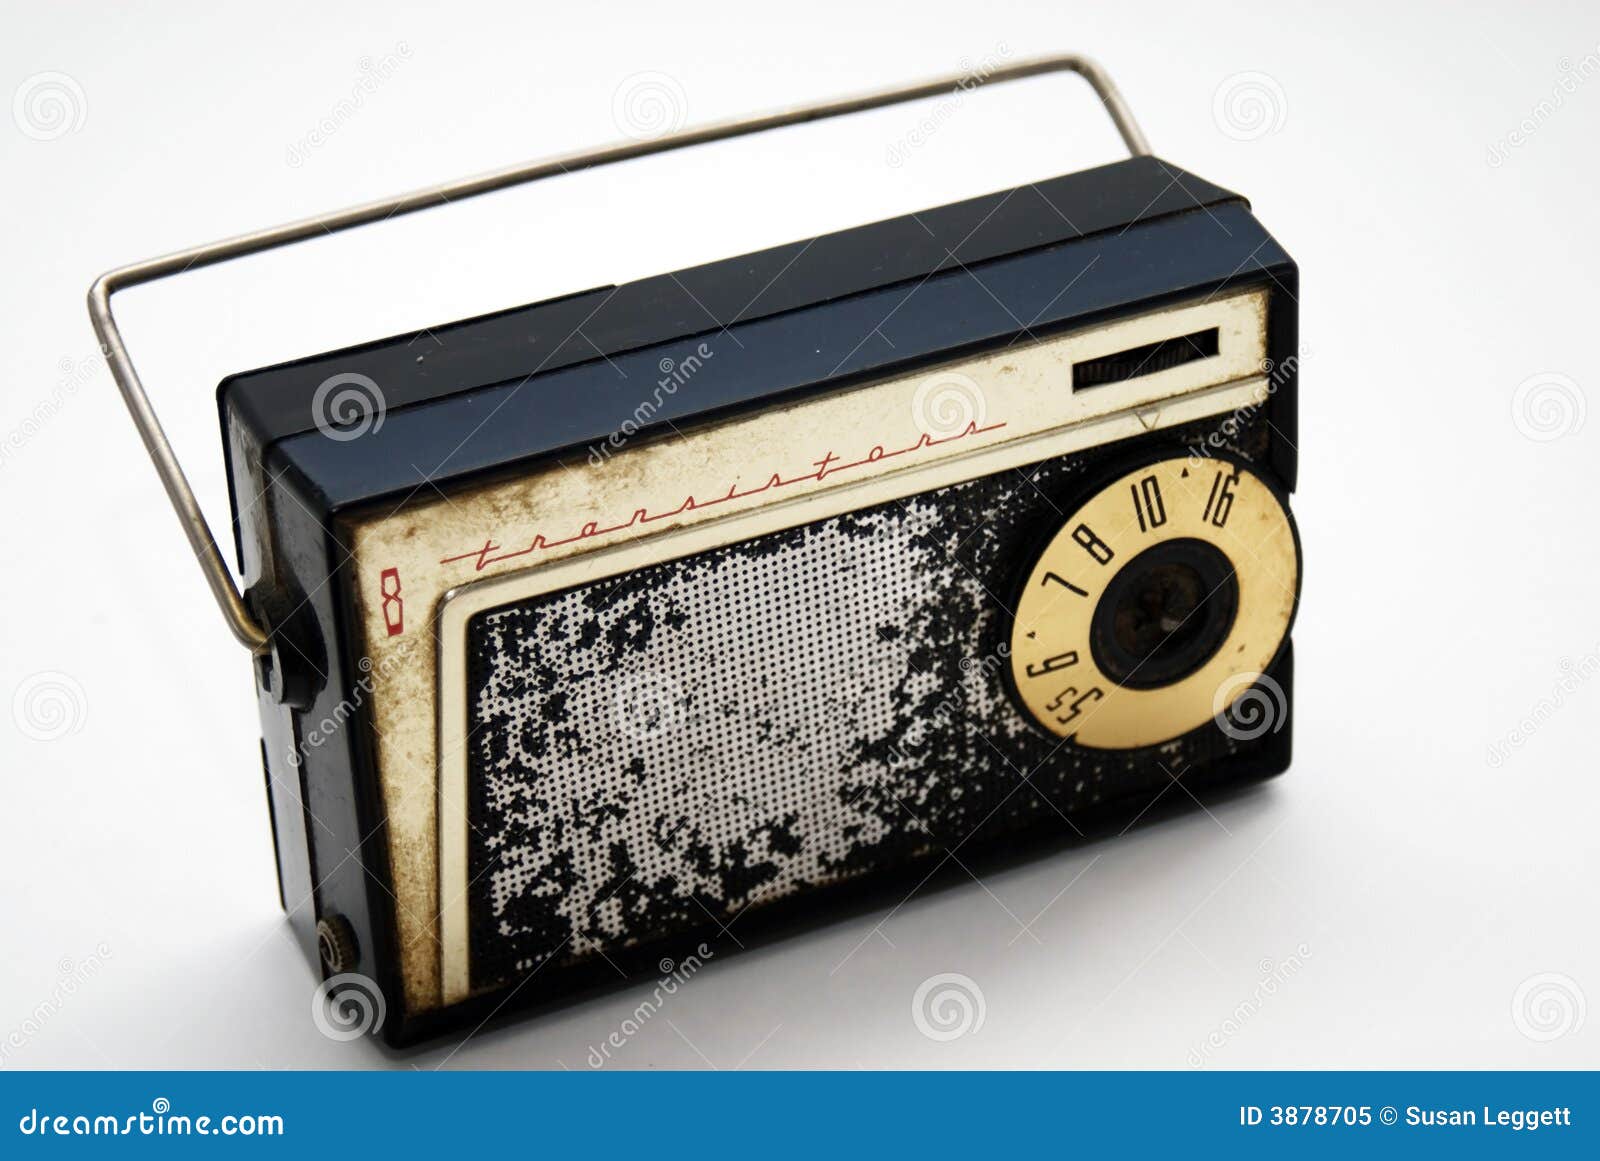 old transistor radio